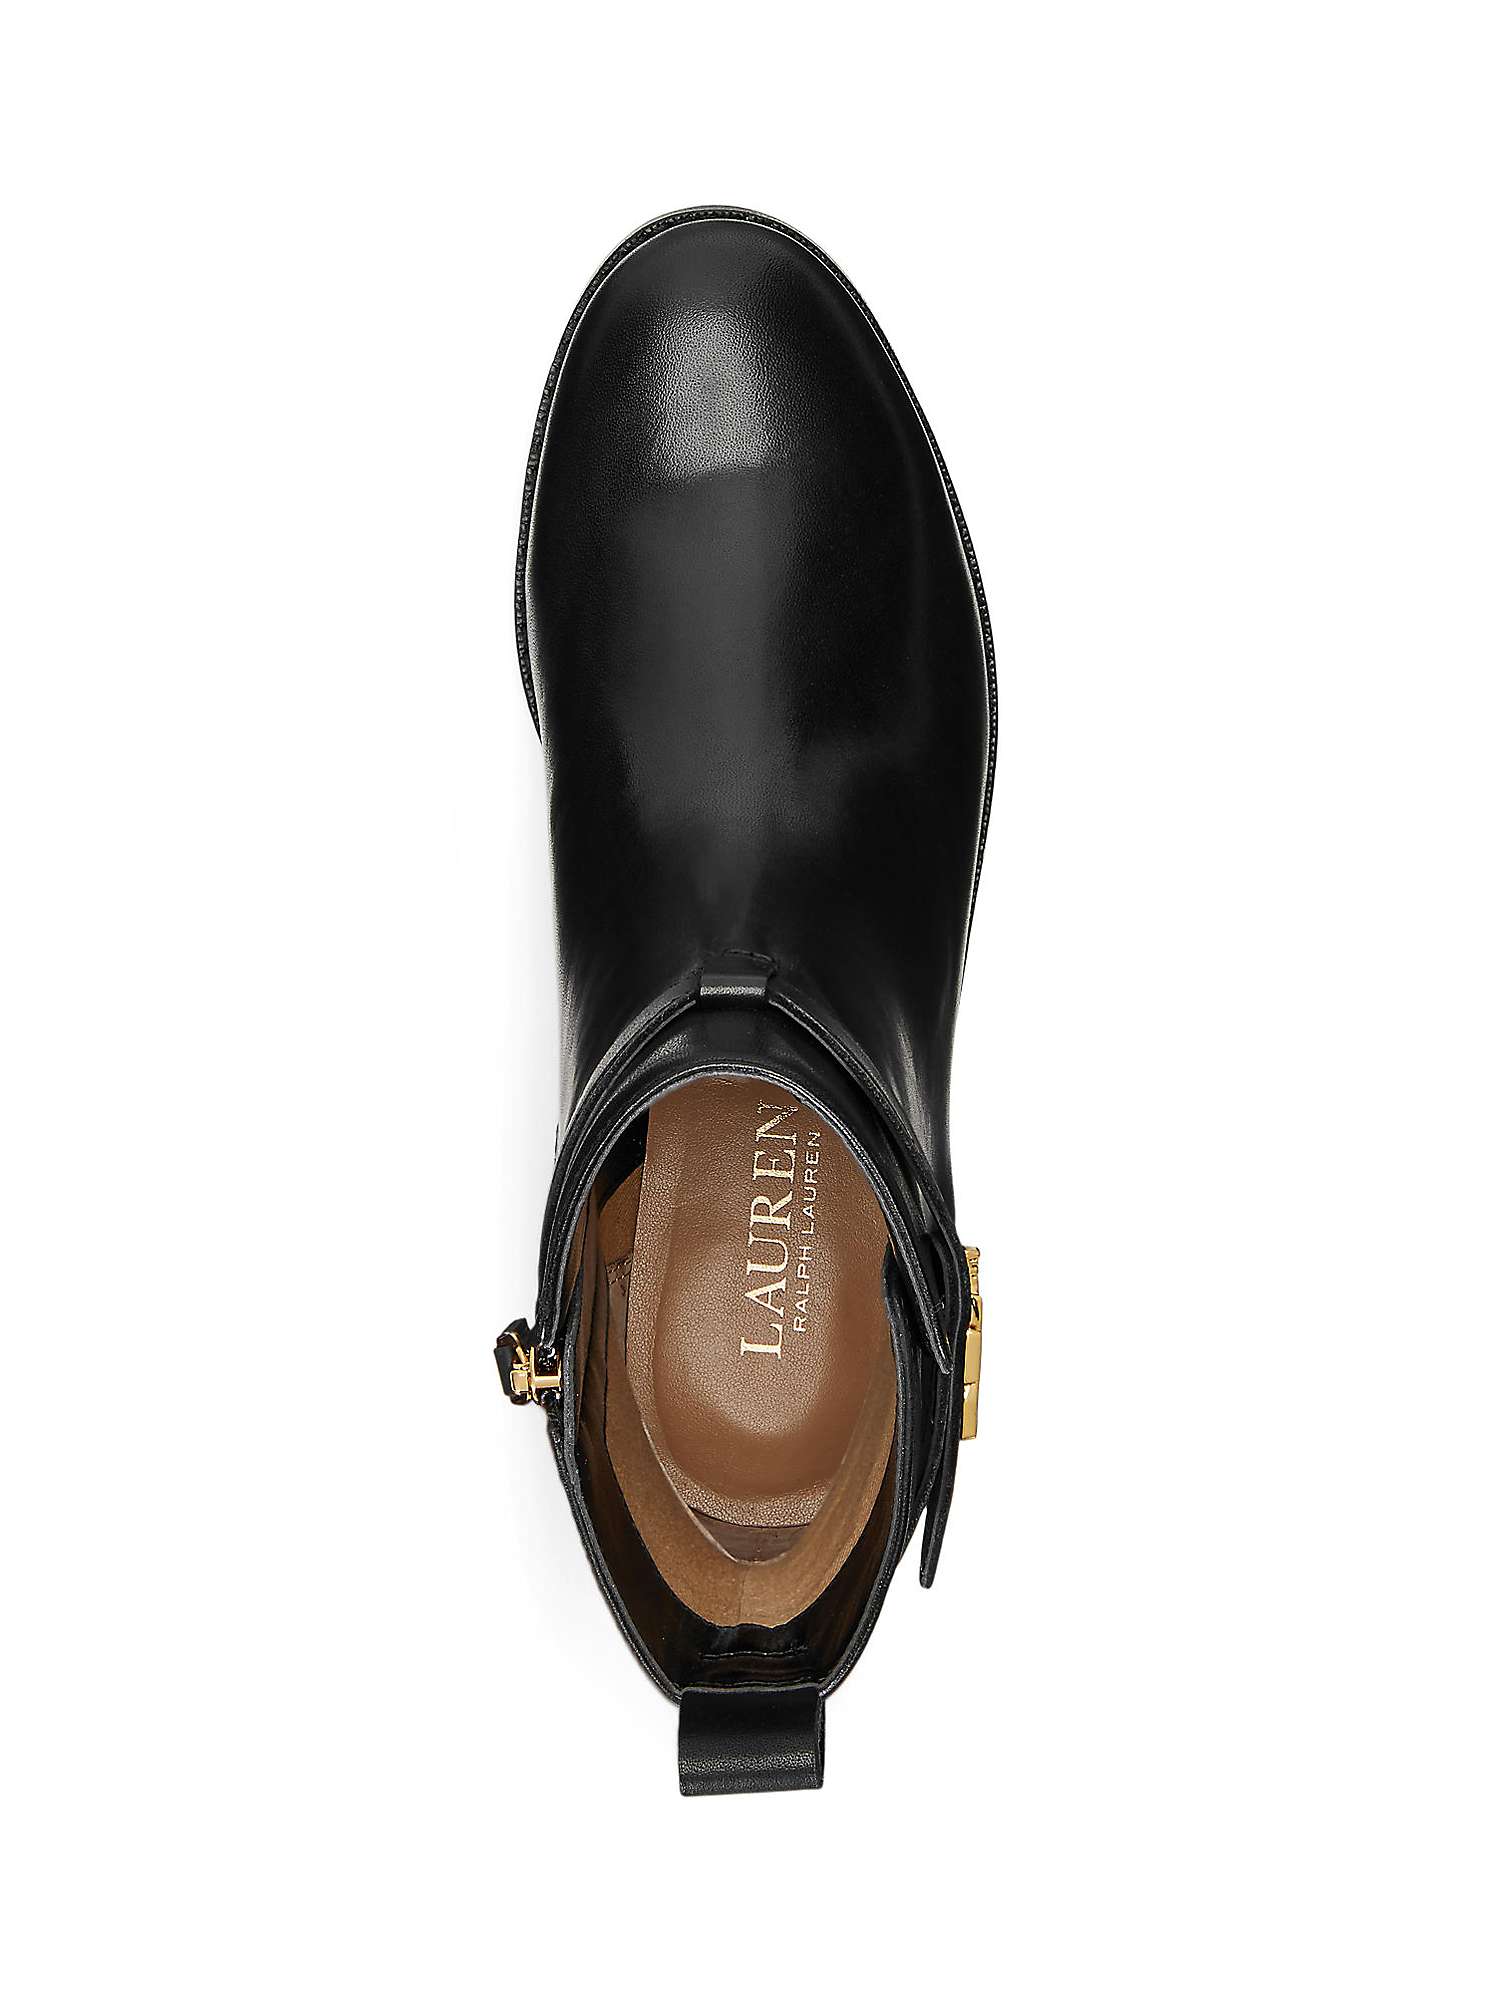 Lauren Ralph Lauren Leather Chelsea Boots, Black at John Lewis & Partners